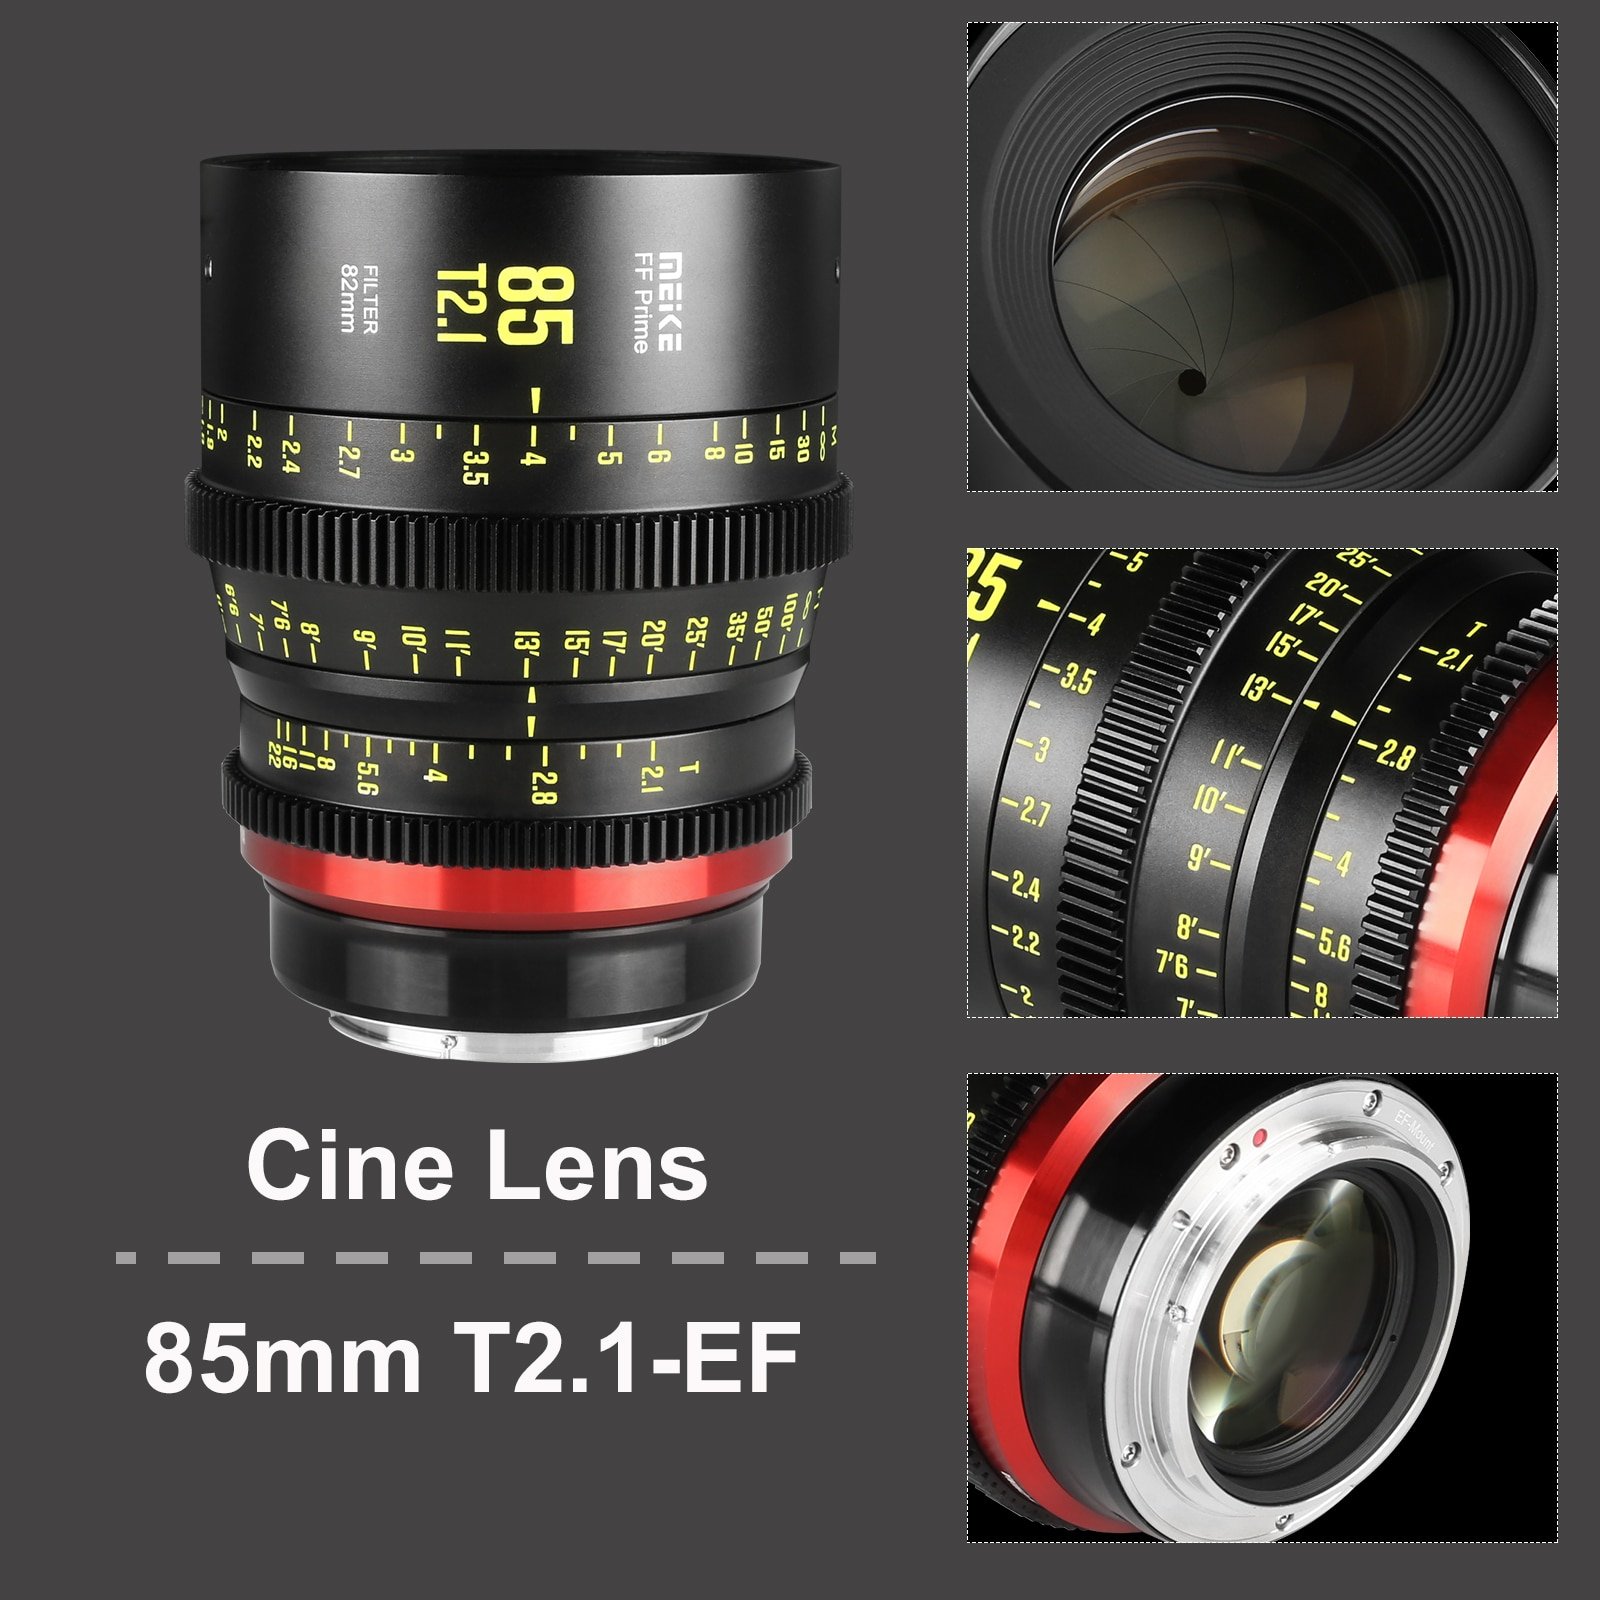 Meike Prime 85mm T2.1 Cine Lens for Full Frame Cinema Camera Systems